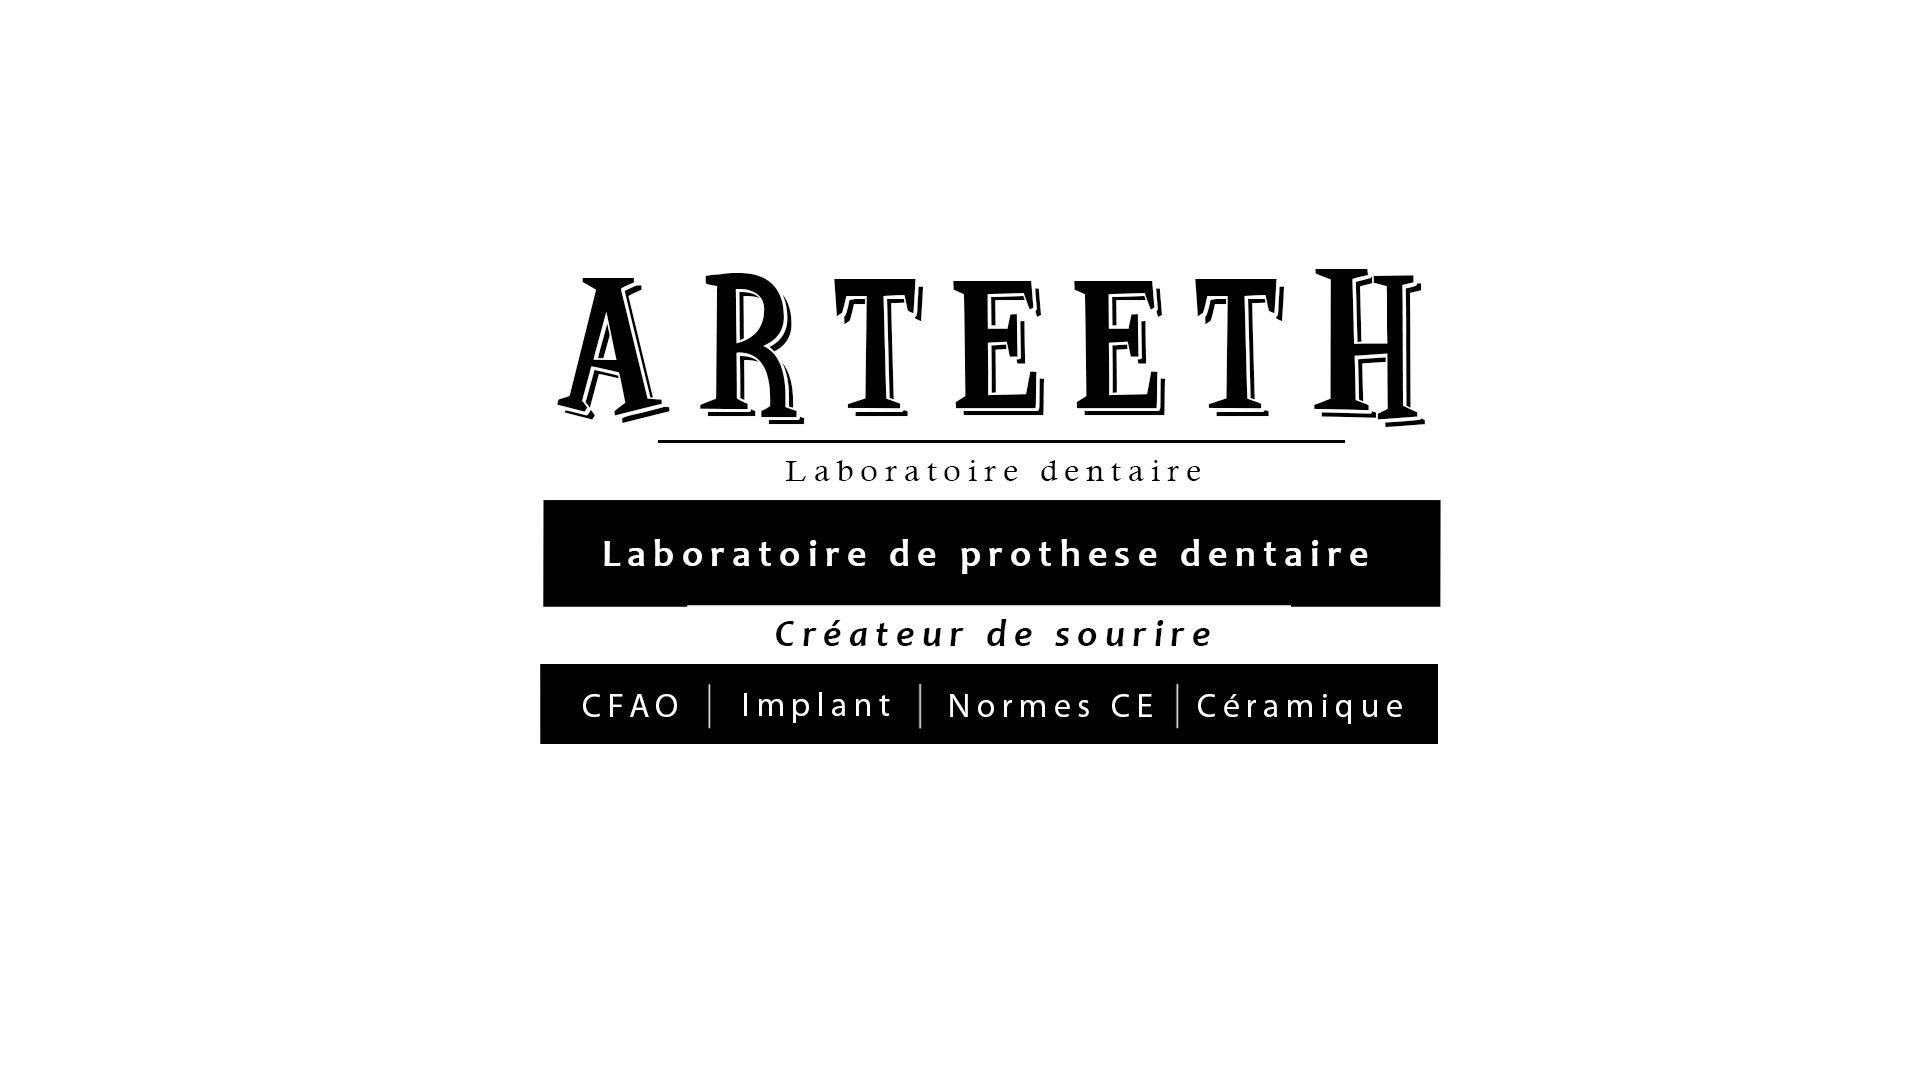 Slider-arteeth prothésiste dentaire paris